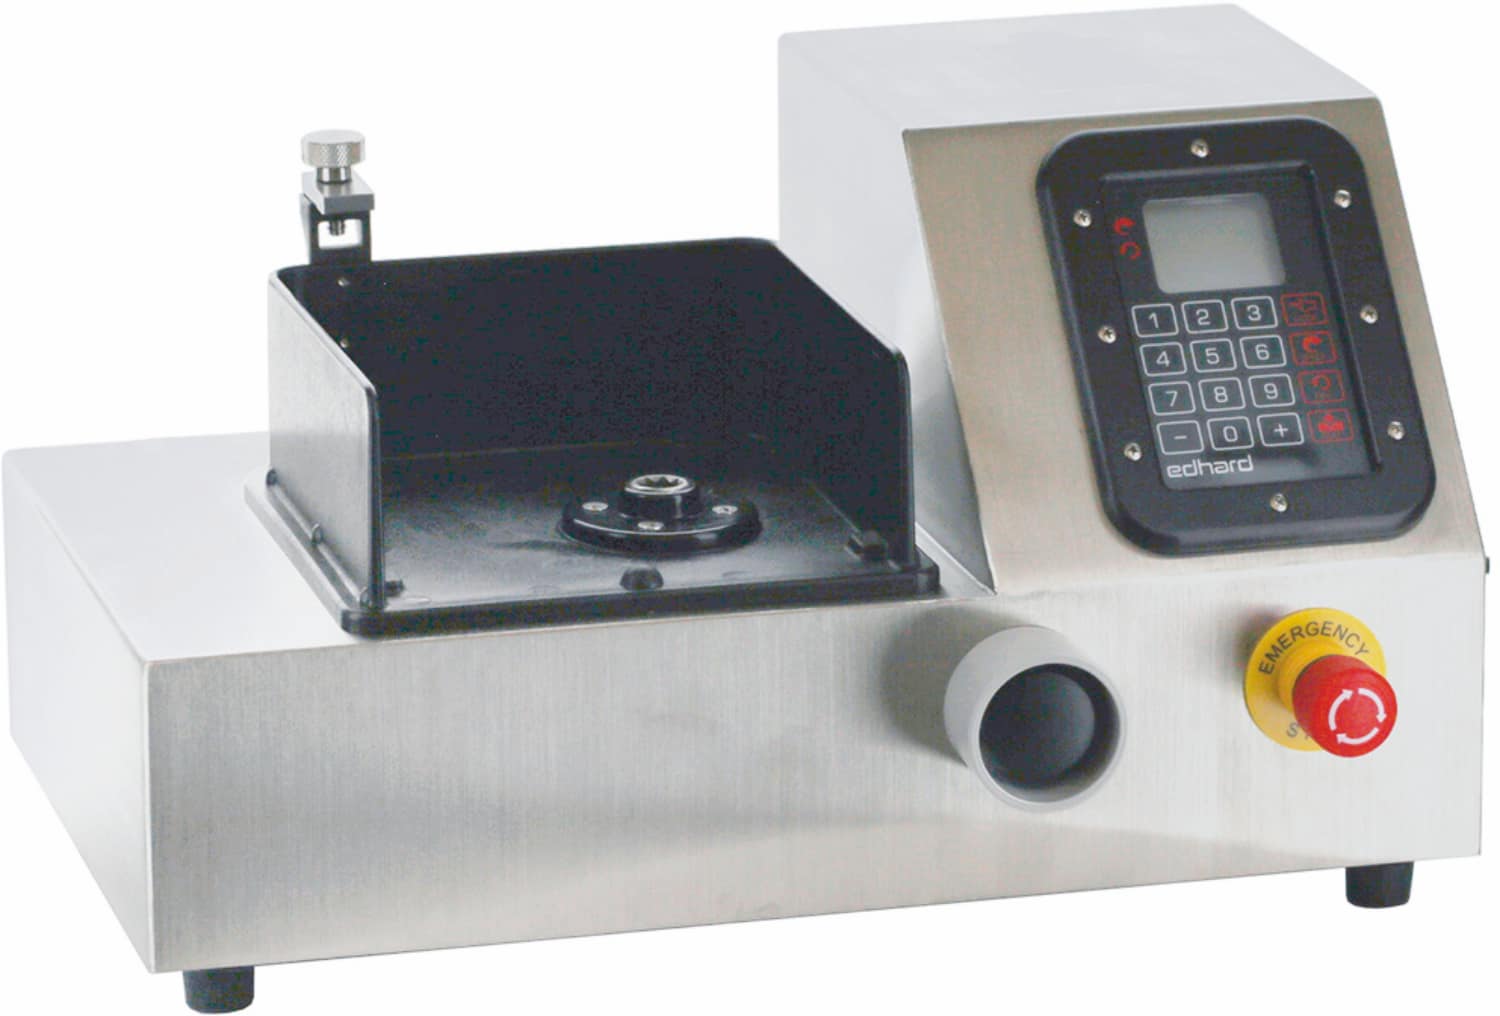 Dosingmeter "Edhard" 186 watt  stainless steel  152845